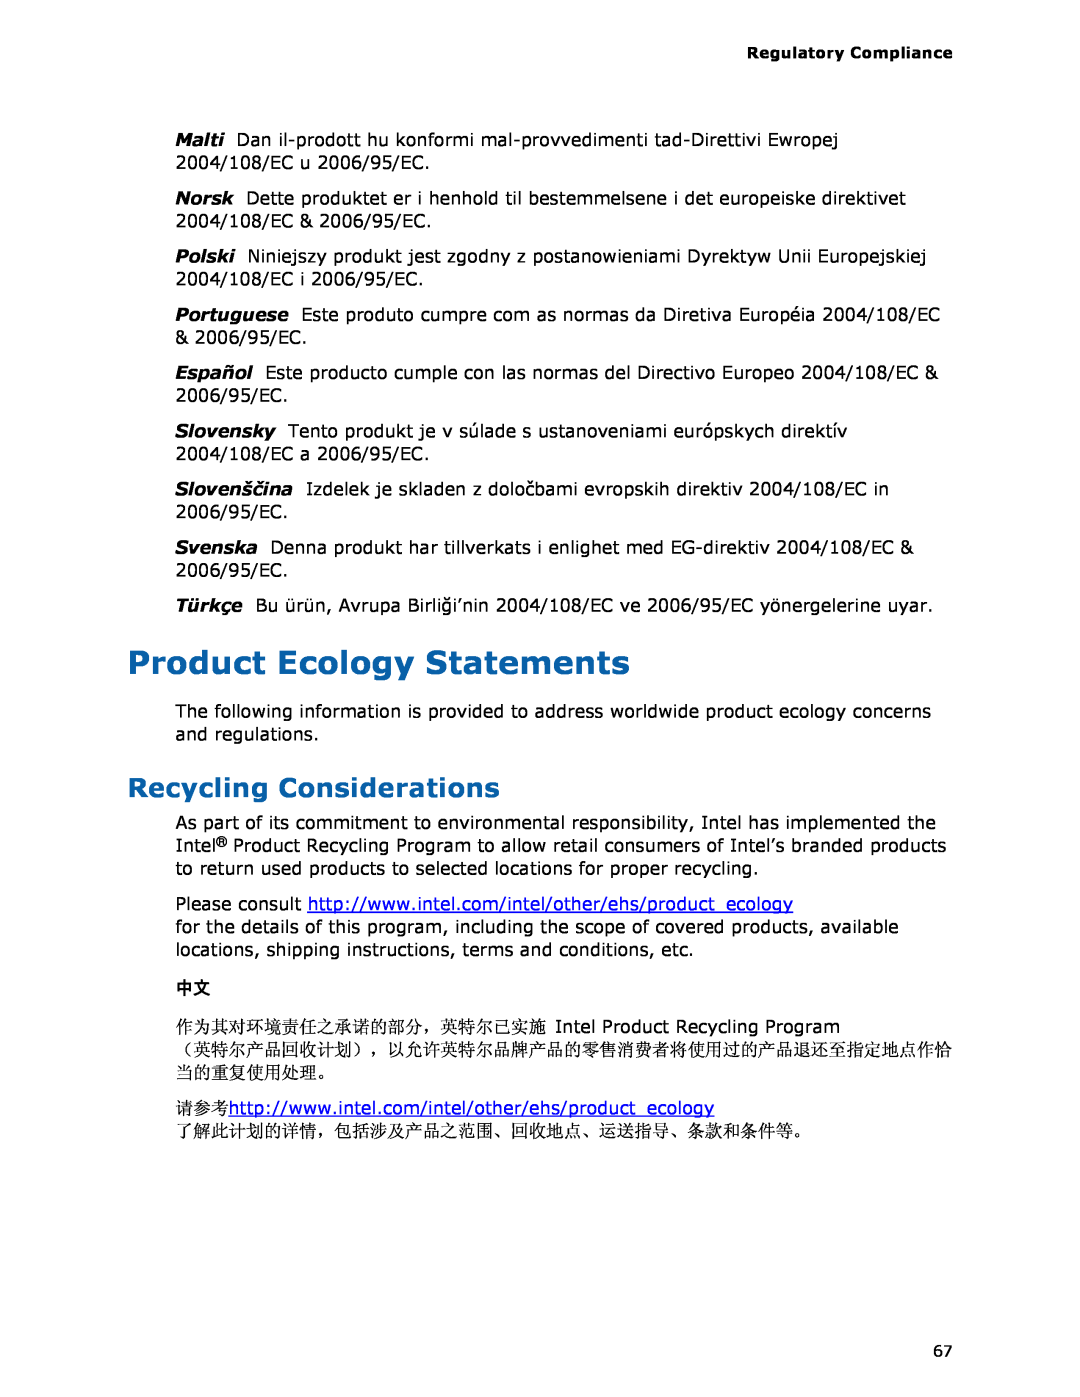 Intel DG35EC, Intel Desktop Board manual Product Ecology Statements, Recycling Considerations 